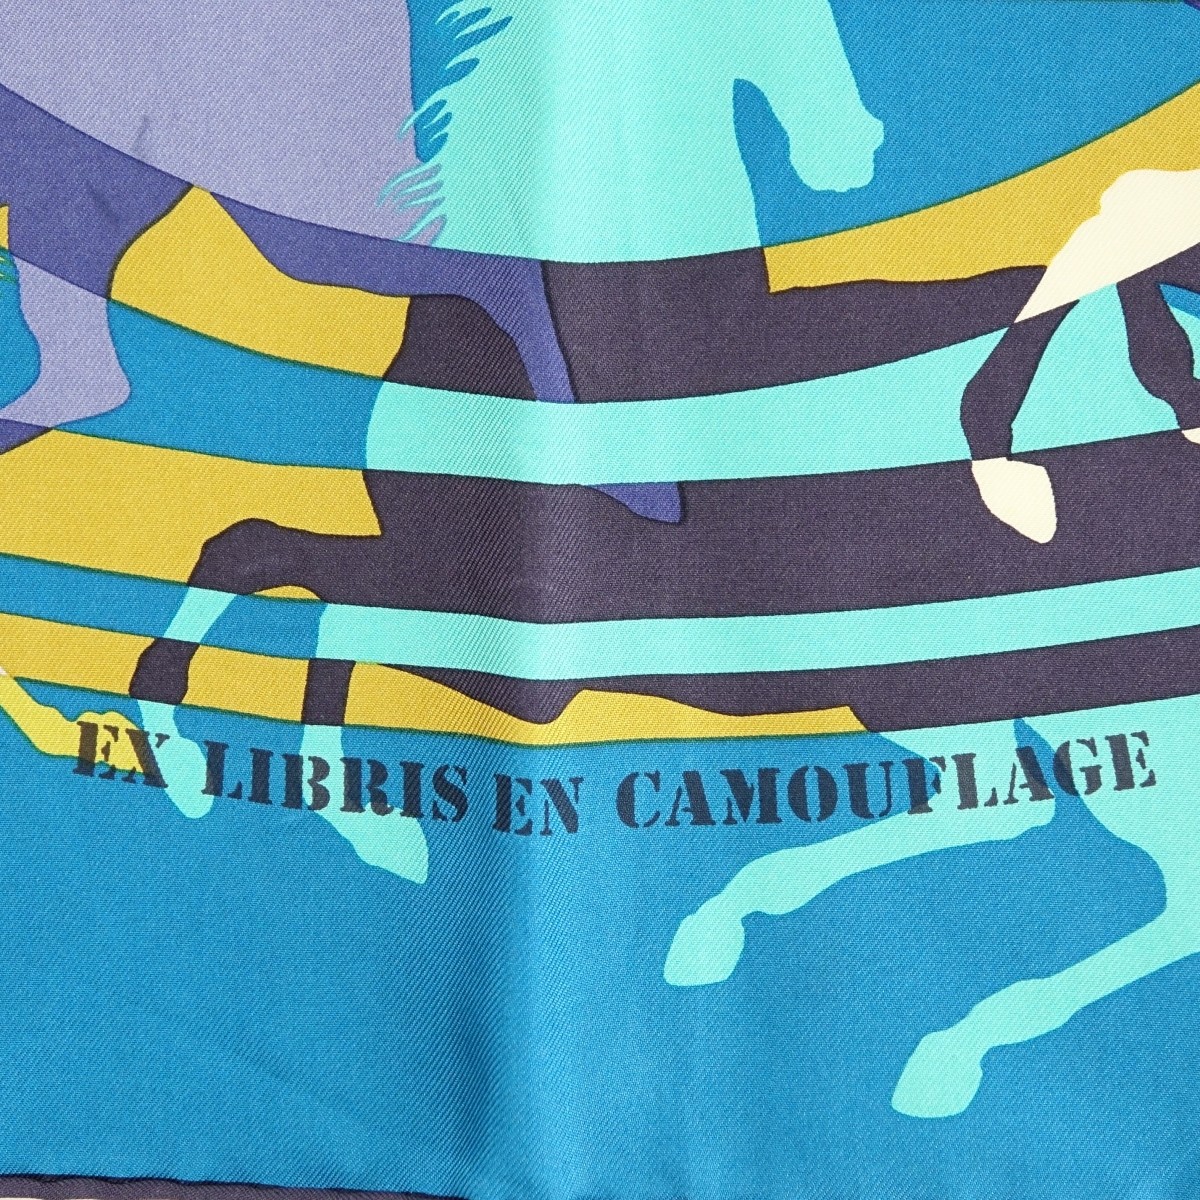 Hermes Ex Libris en Camouflage Twill Silk Scarf